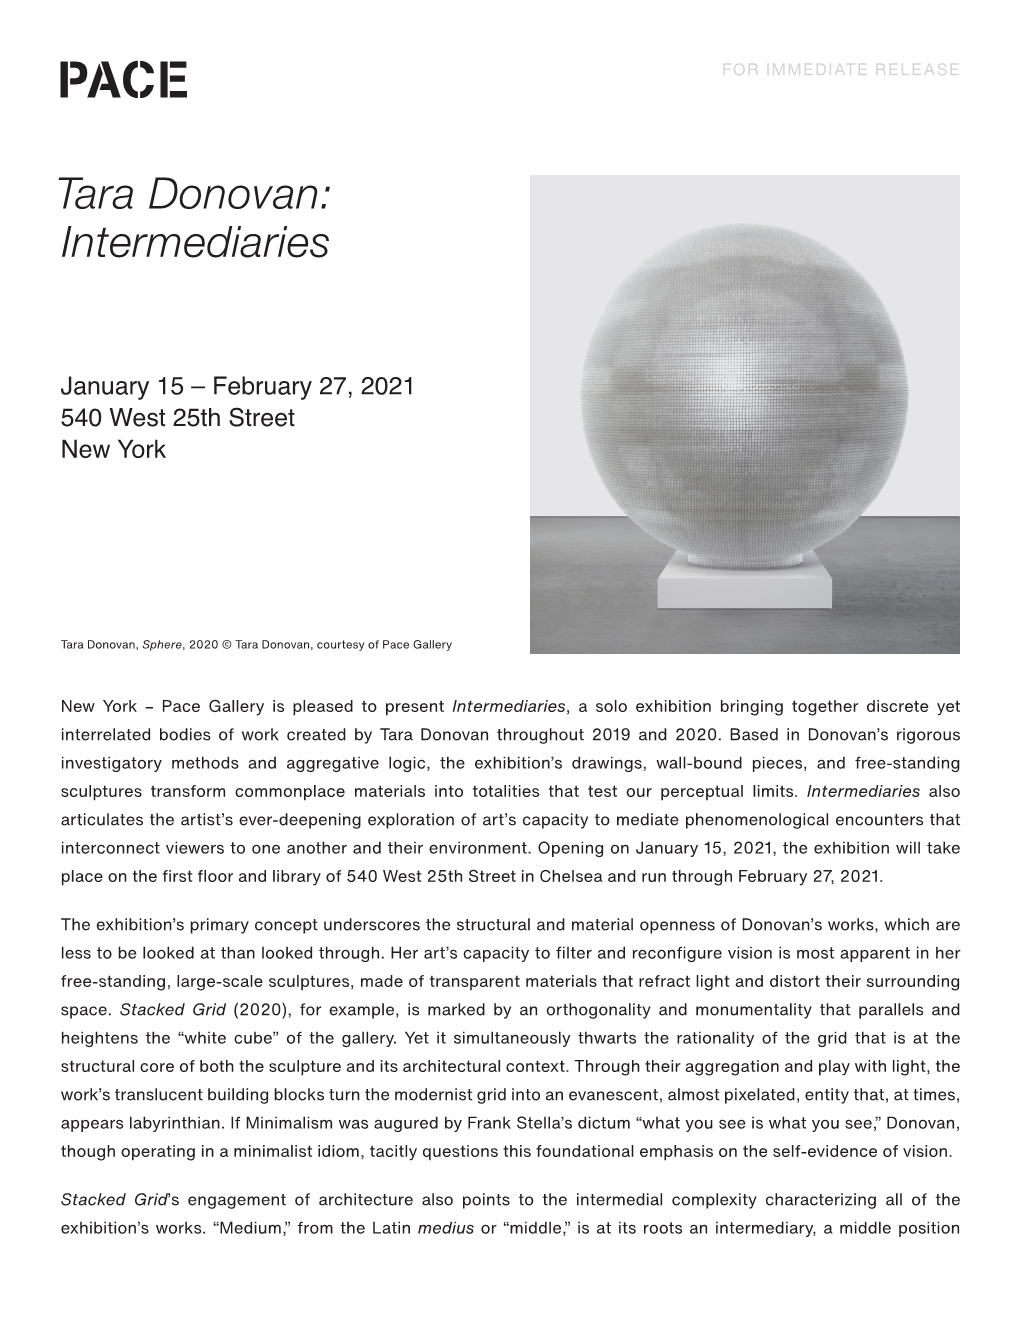 Tara Donovan: Intermediaries